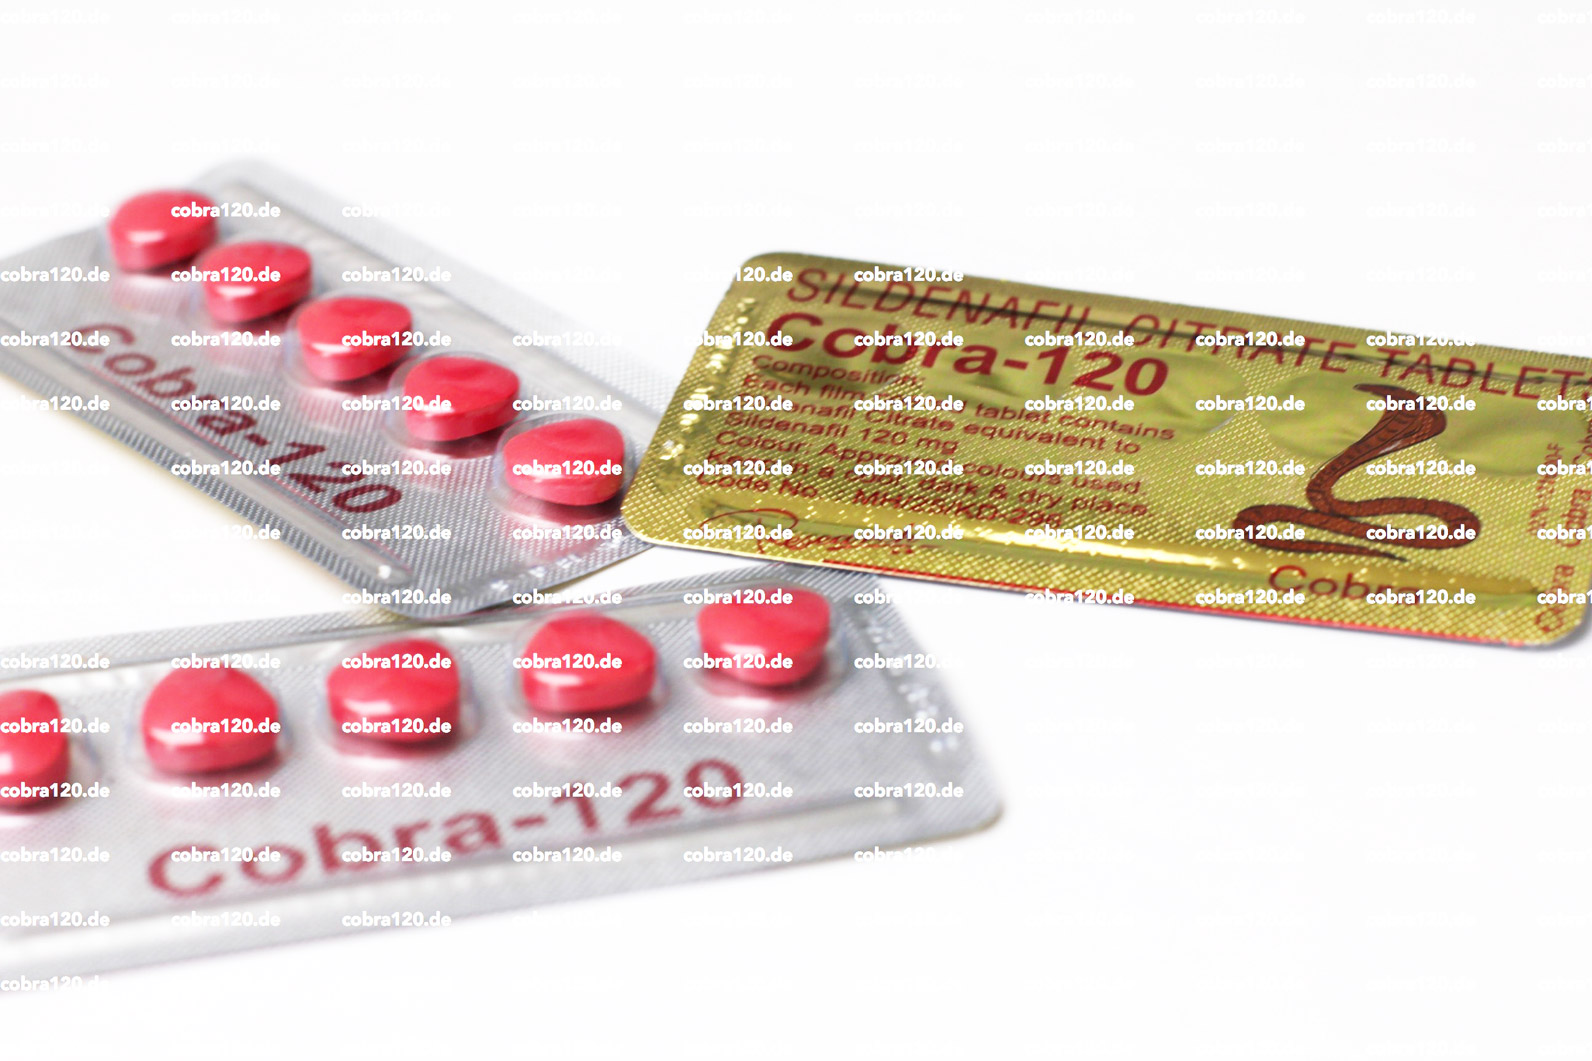 20 x Cobra Vega 120 mg - Potenzmittel rezeptfrei mit Sofortwirkung für.